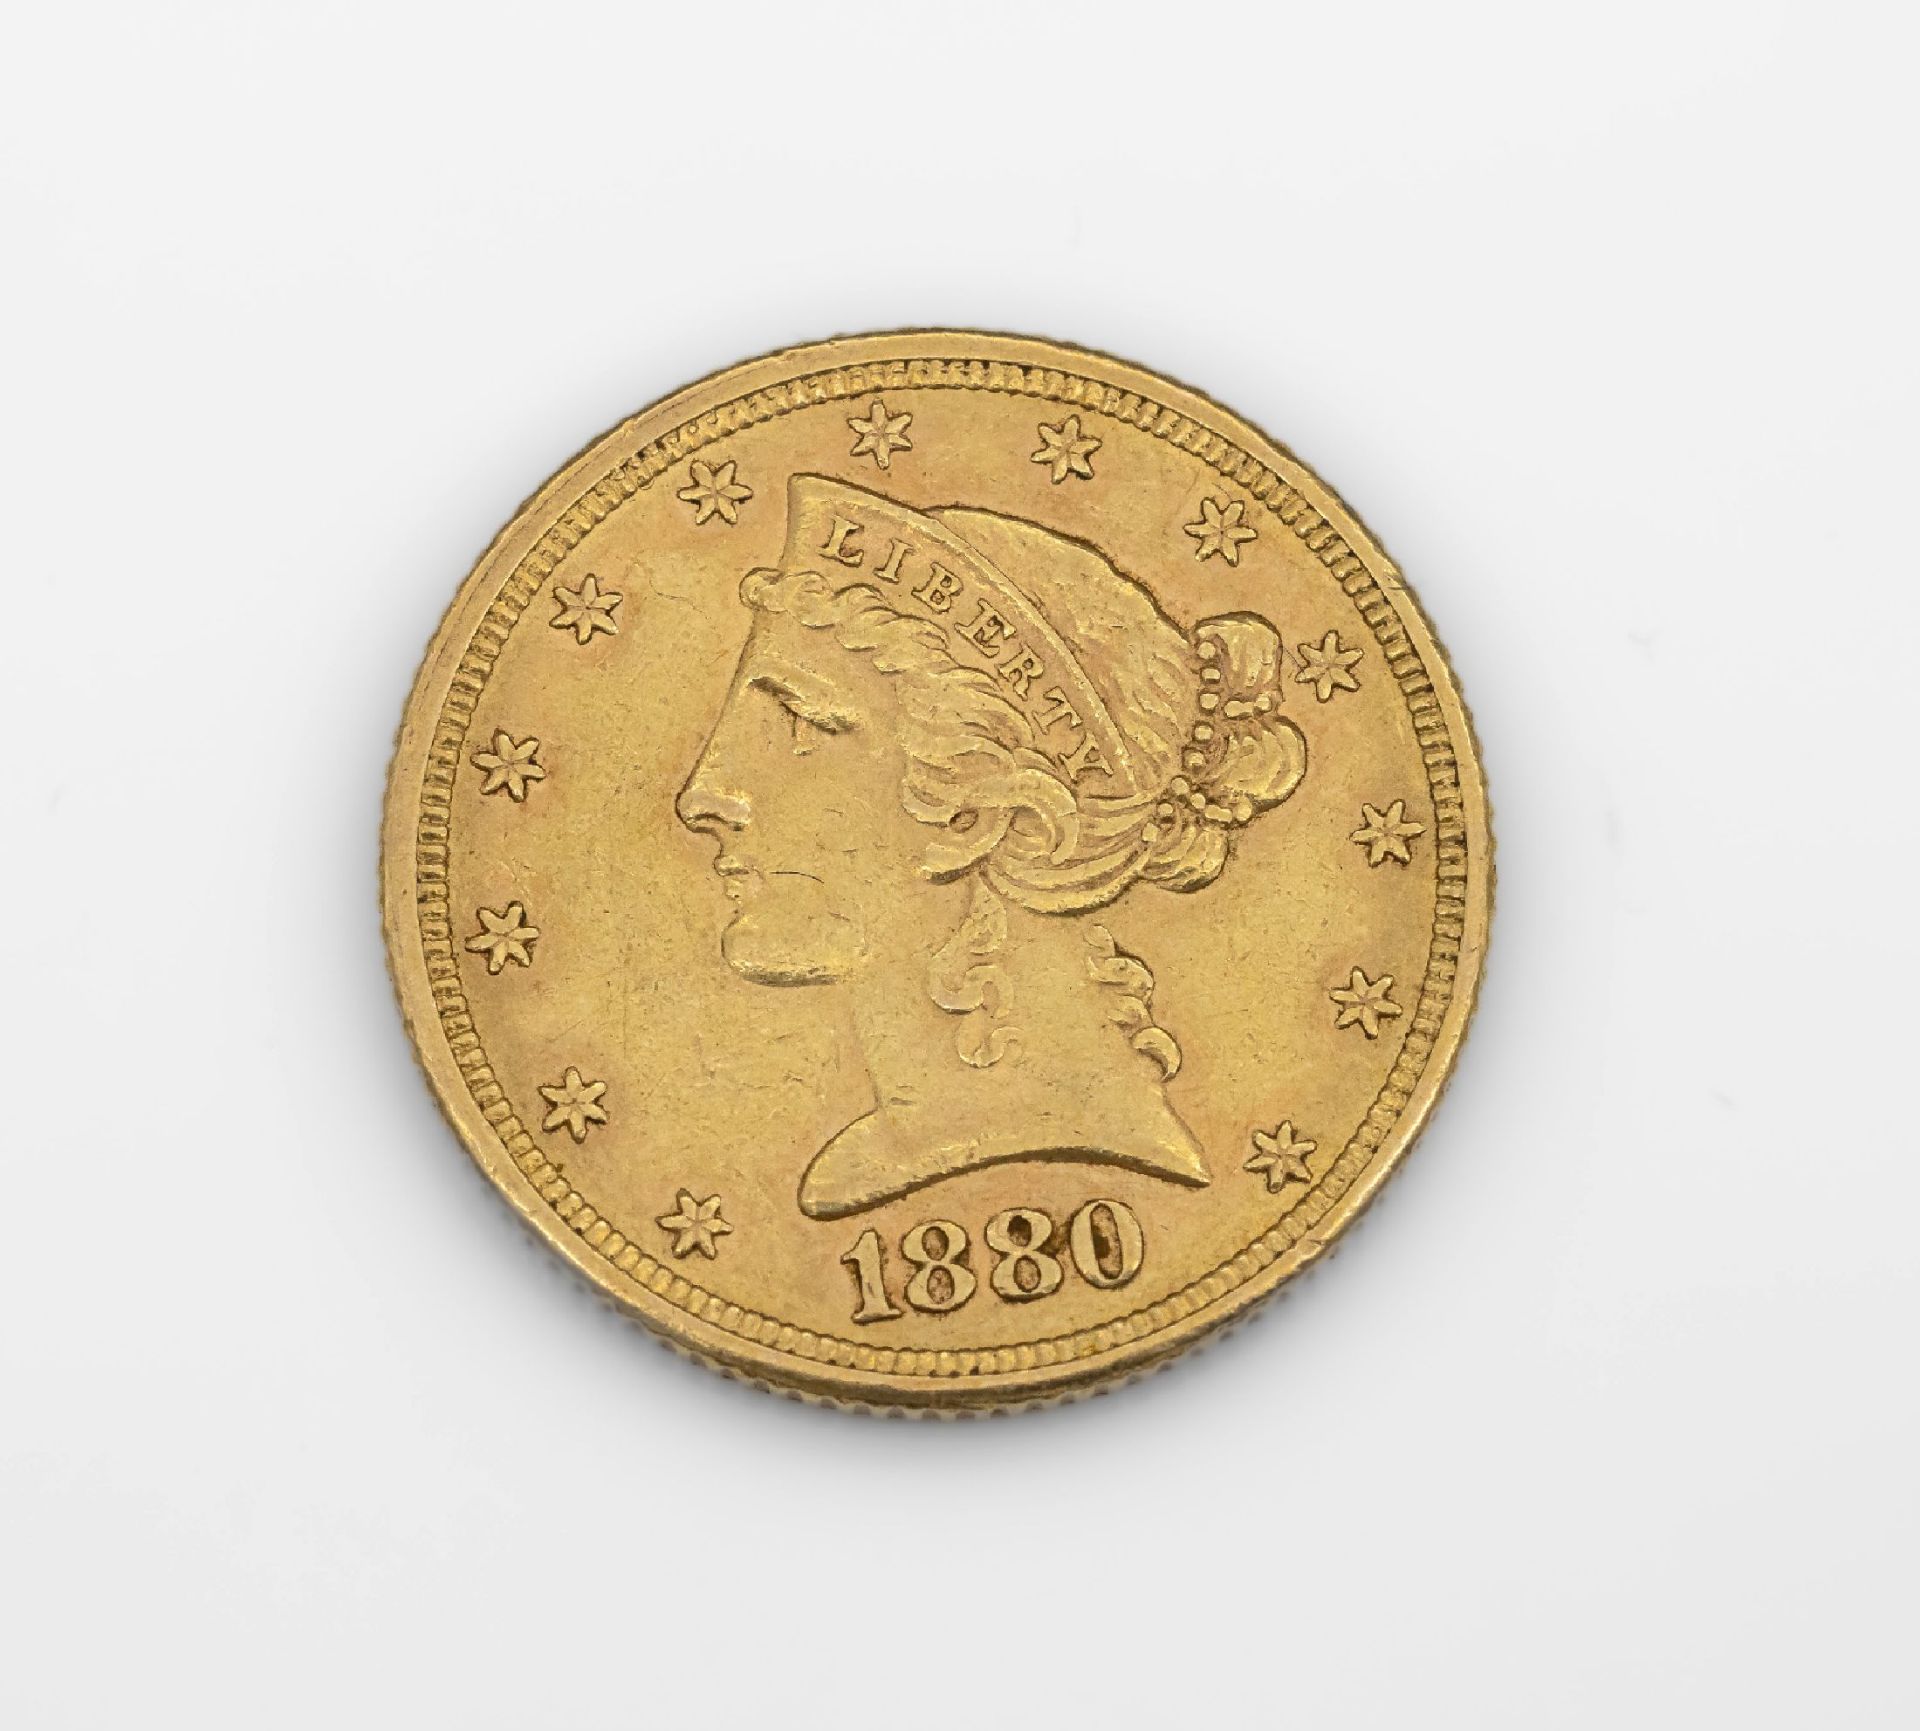 Goldmünze 5 Dollar USA 1880, Liberty Head und